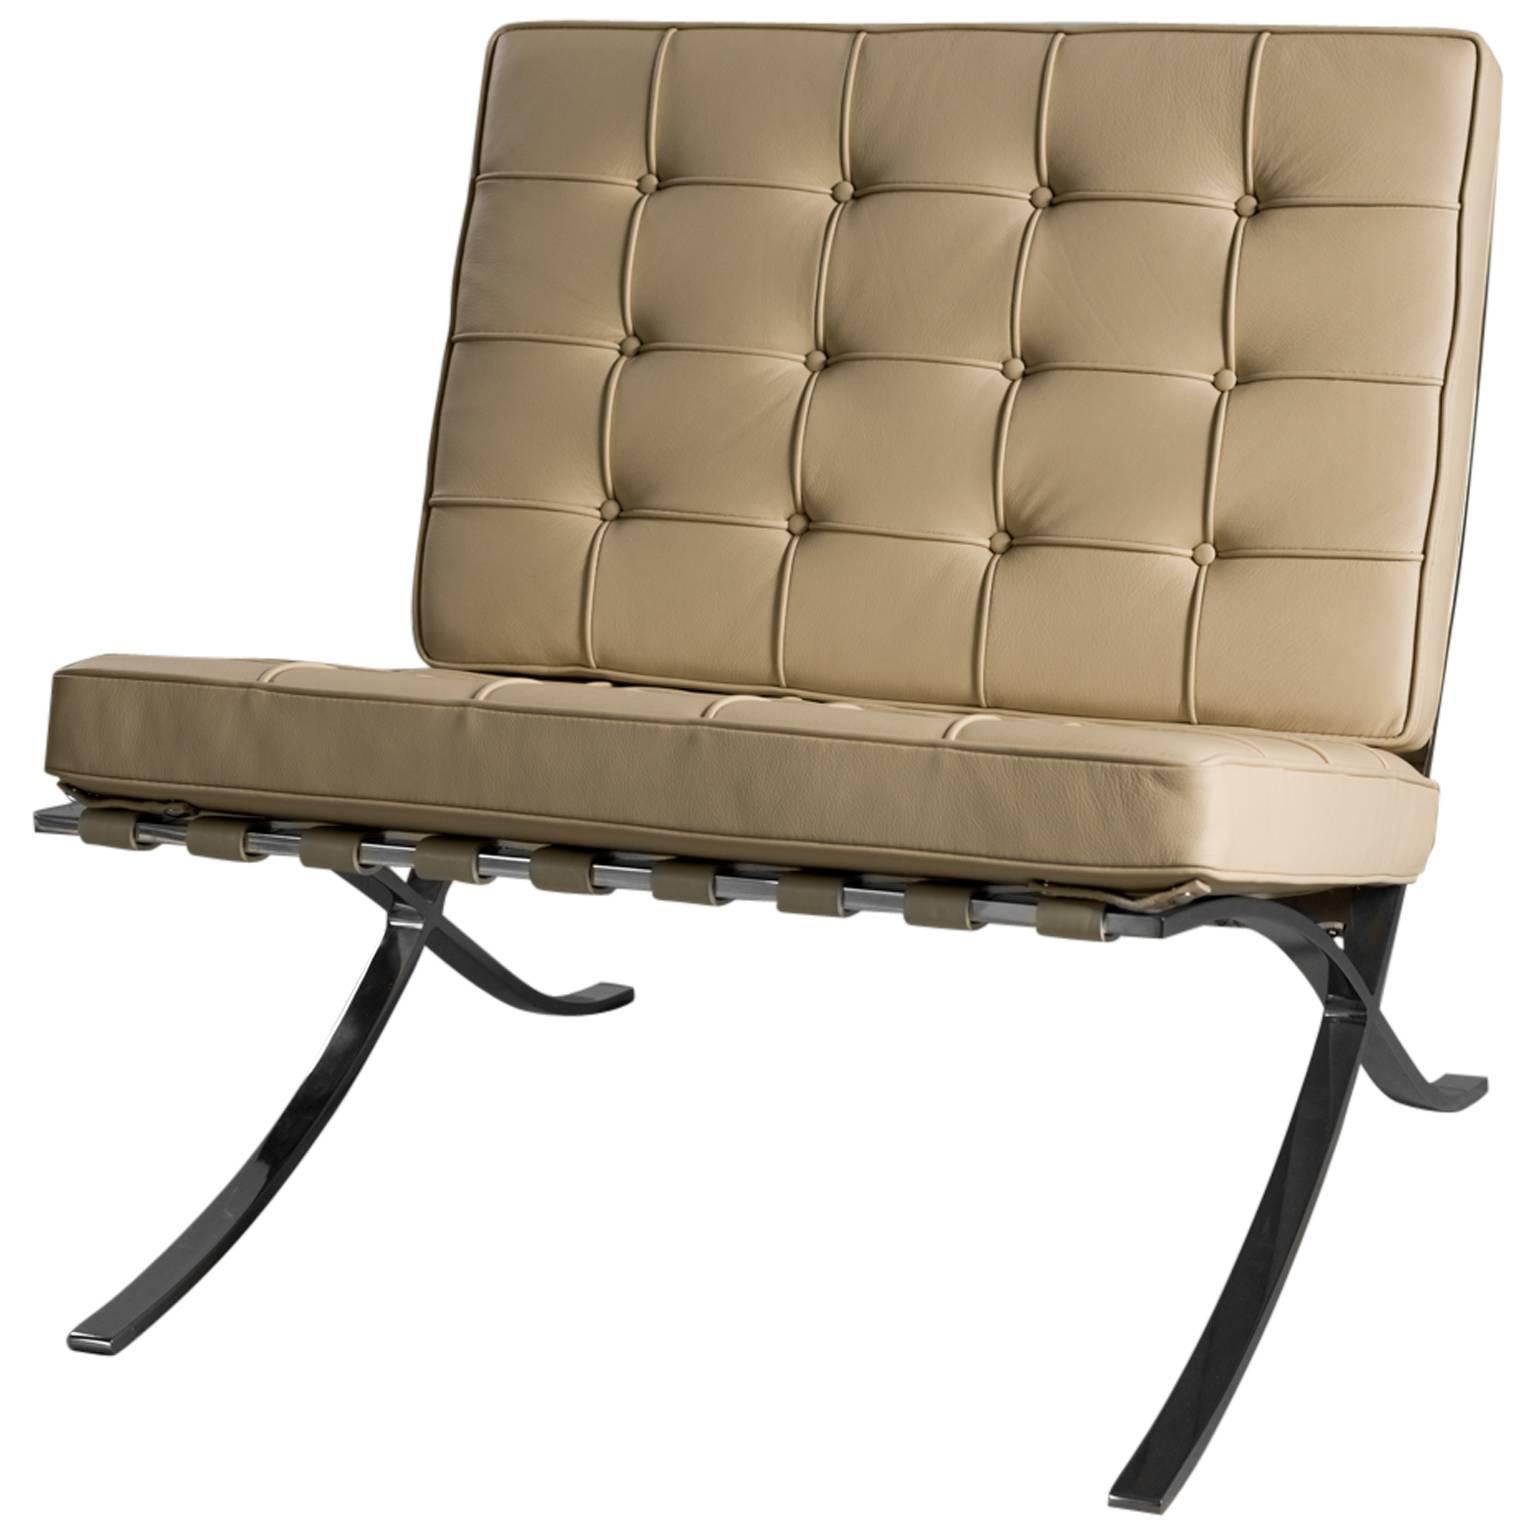 Ludwig Mies van der Rohe for Knoll "Barcelona" Chair